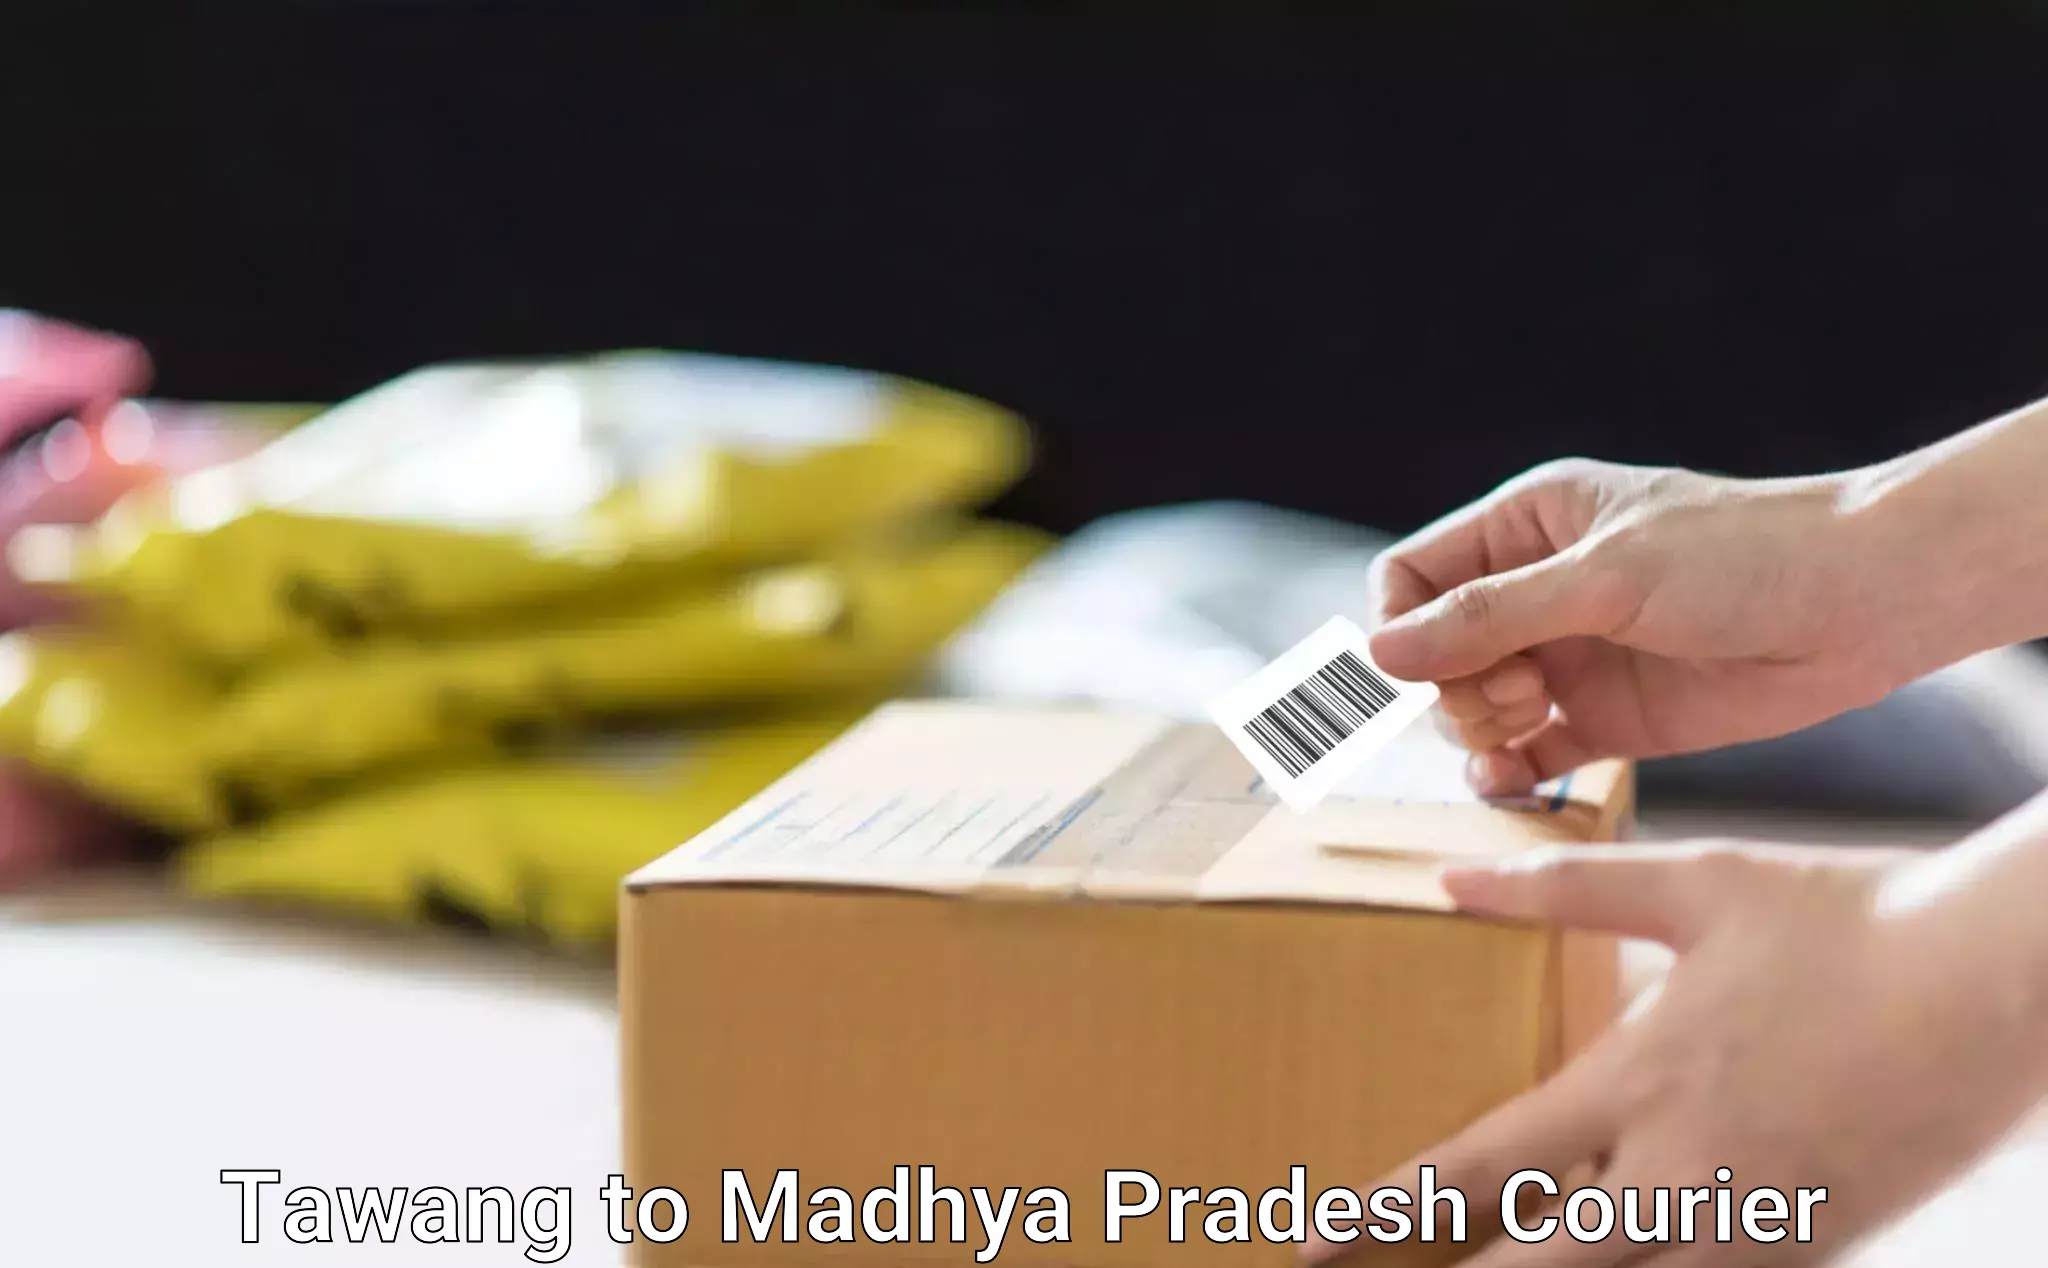 Courier service comparison Tawang to Madhya Pradesh